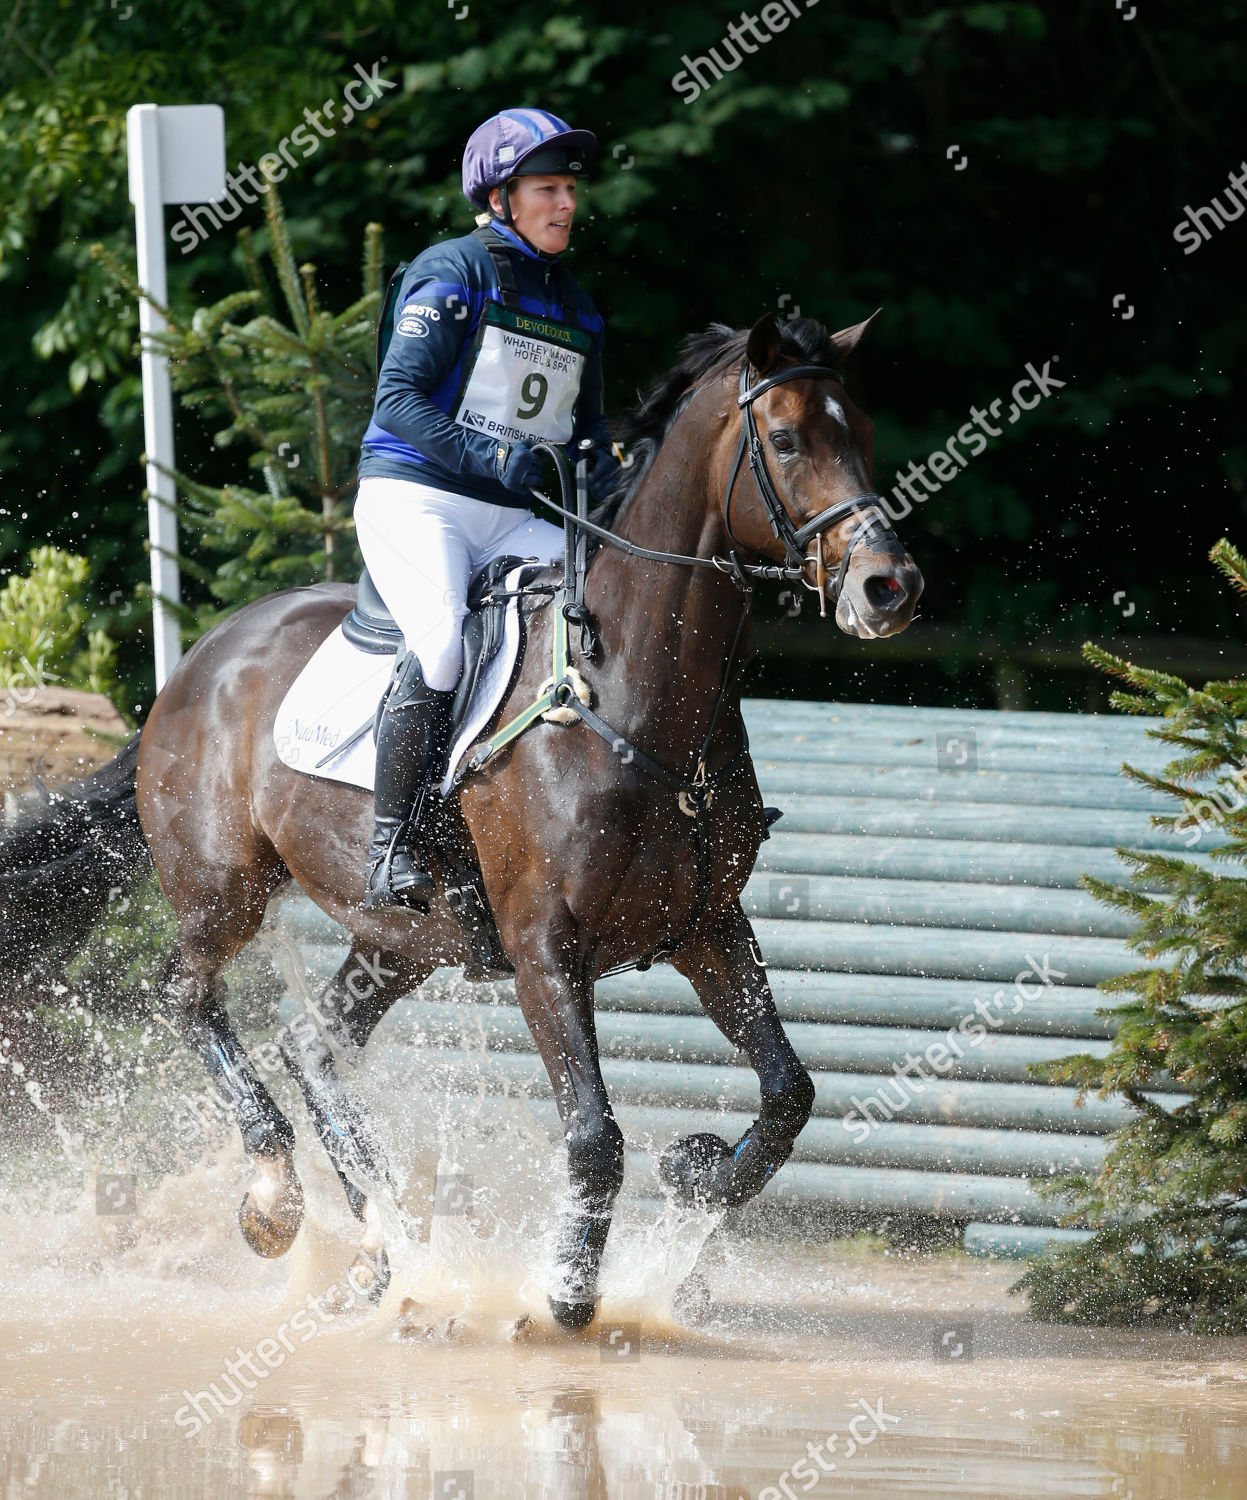 the-whatley-manor-horse-trials-gatcombe-park-gloucestershire-uk-shutterstock-editorial-10414494u.jpg